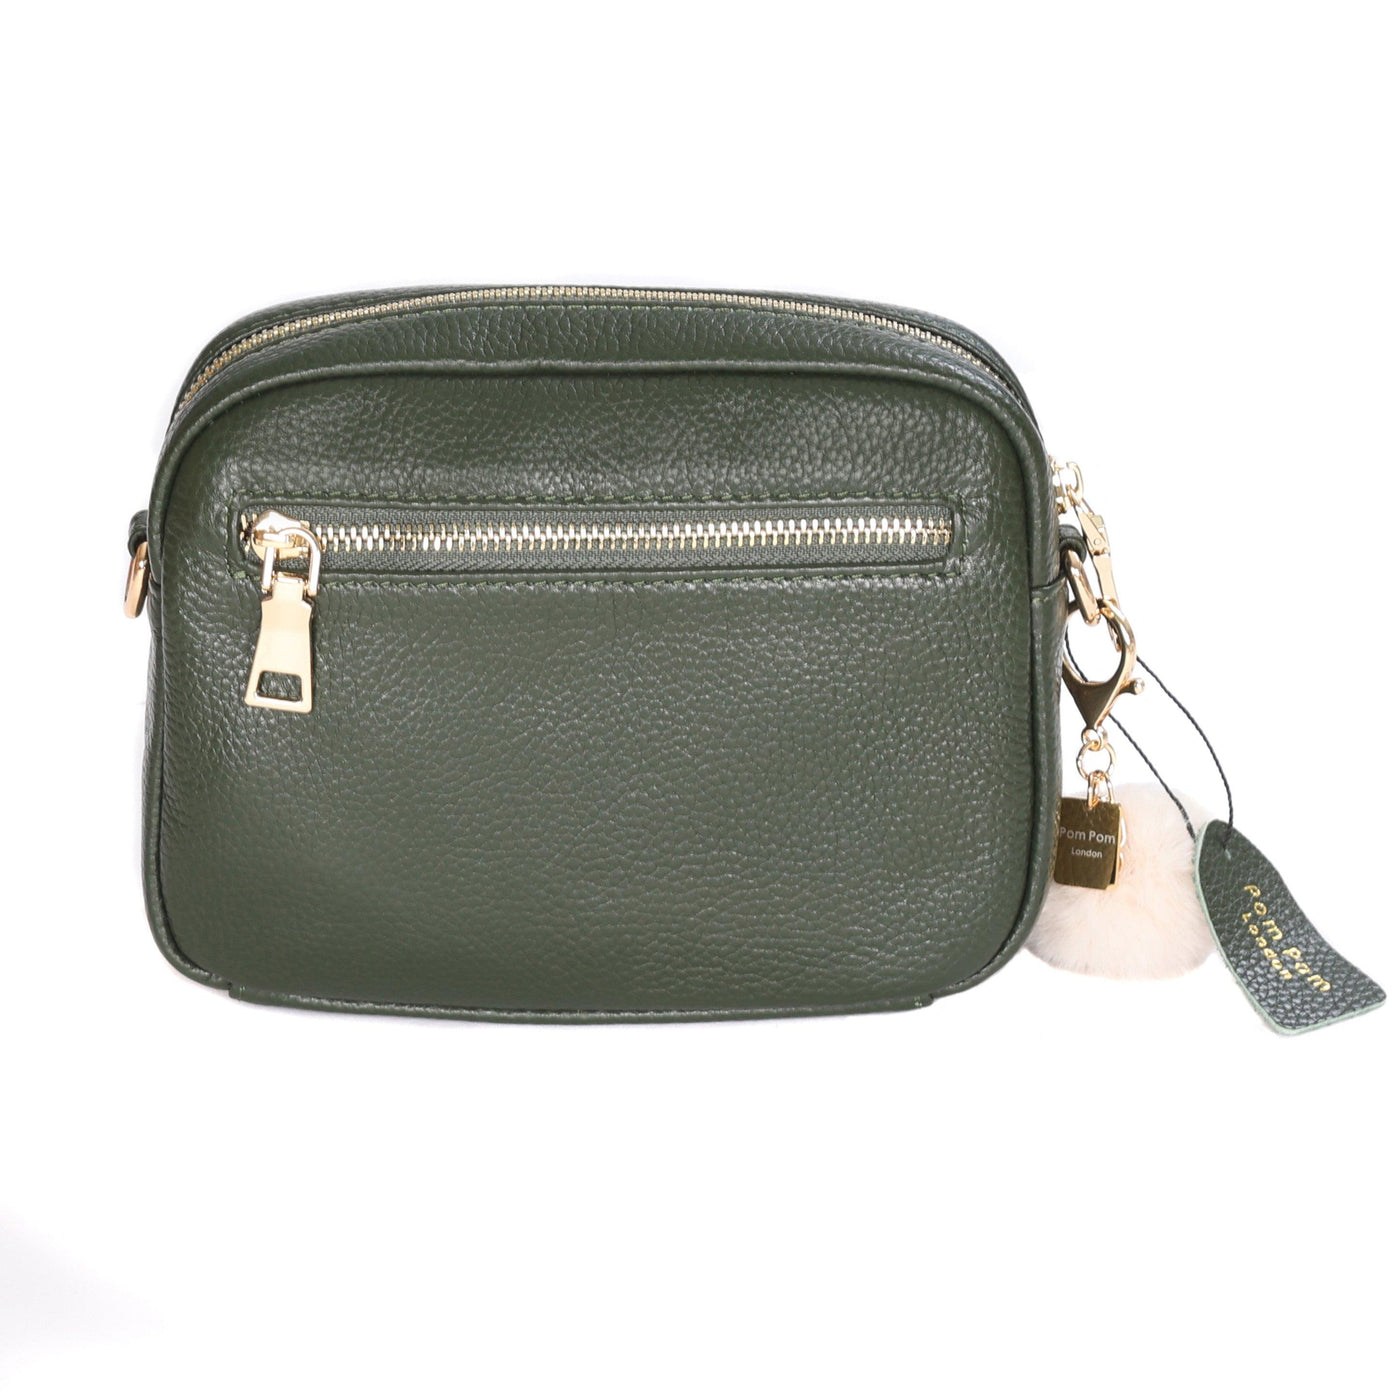 Mayfair Bag Vintage Green & Accessories - Pom Pom London